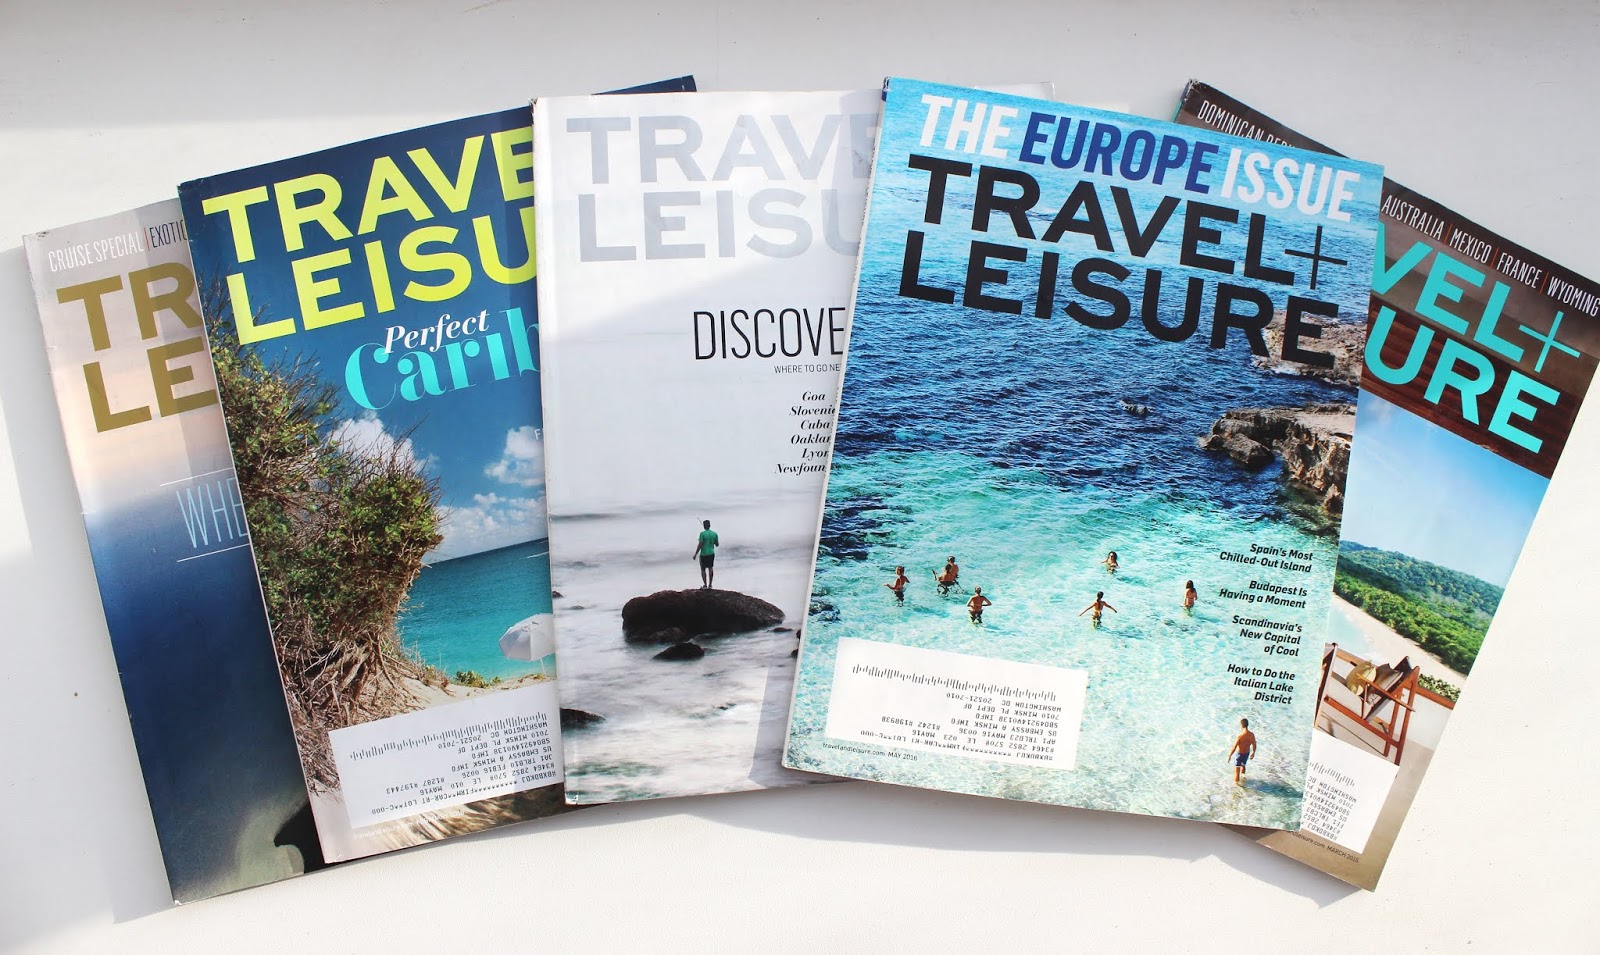 Traveling magazine. Travel журналы. Журнала Travel+Leisure. Журнал о путешествиях. Журнал о путешествиях по России.